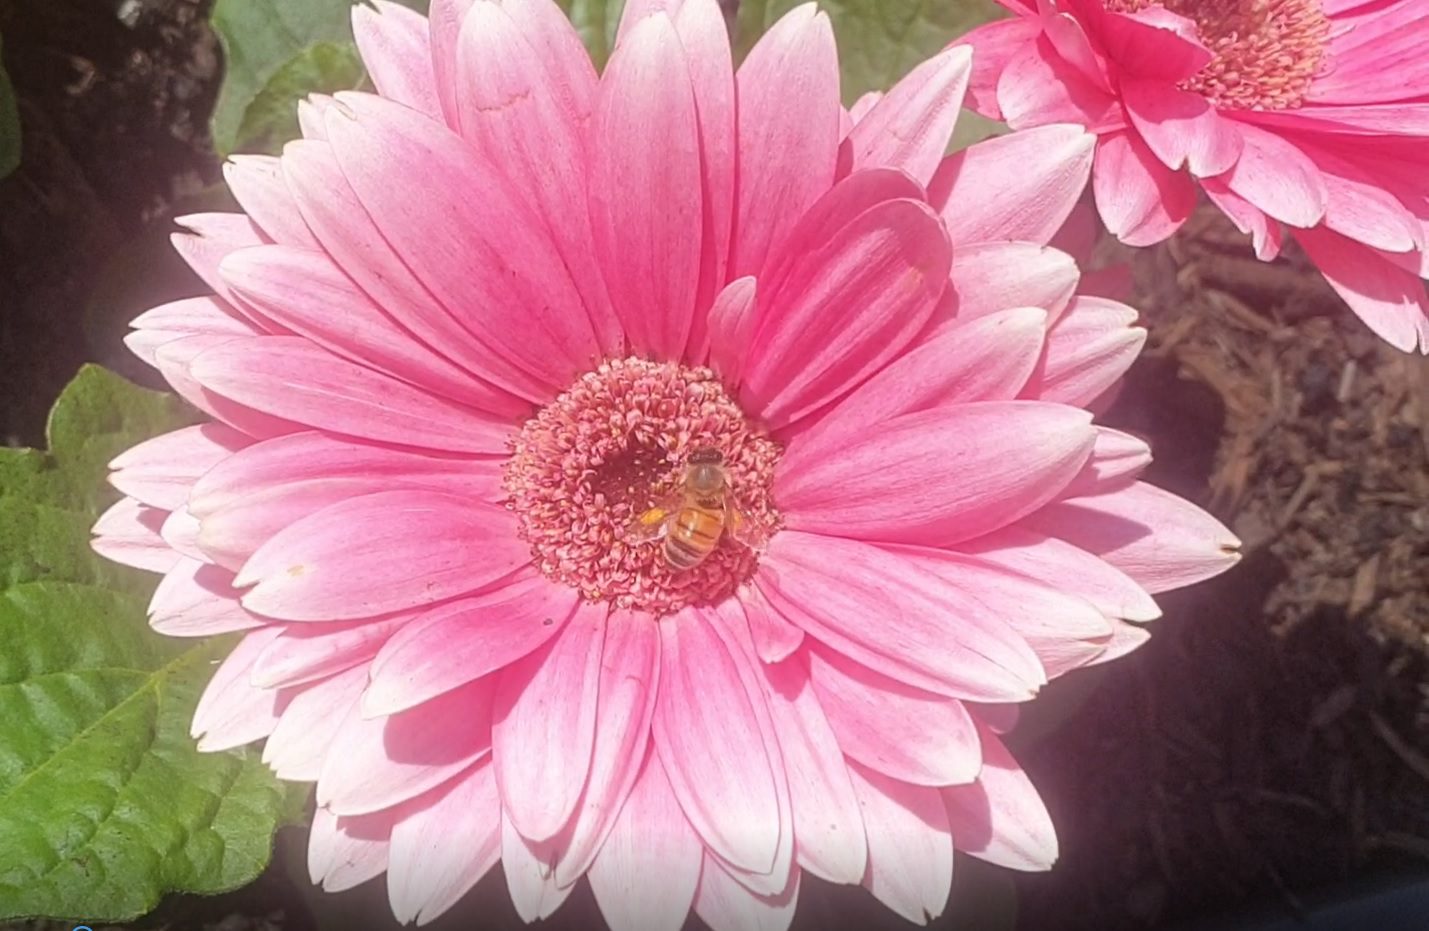 The honeybee on a flower